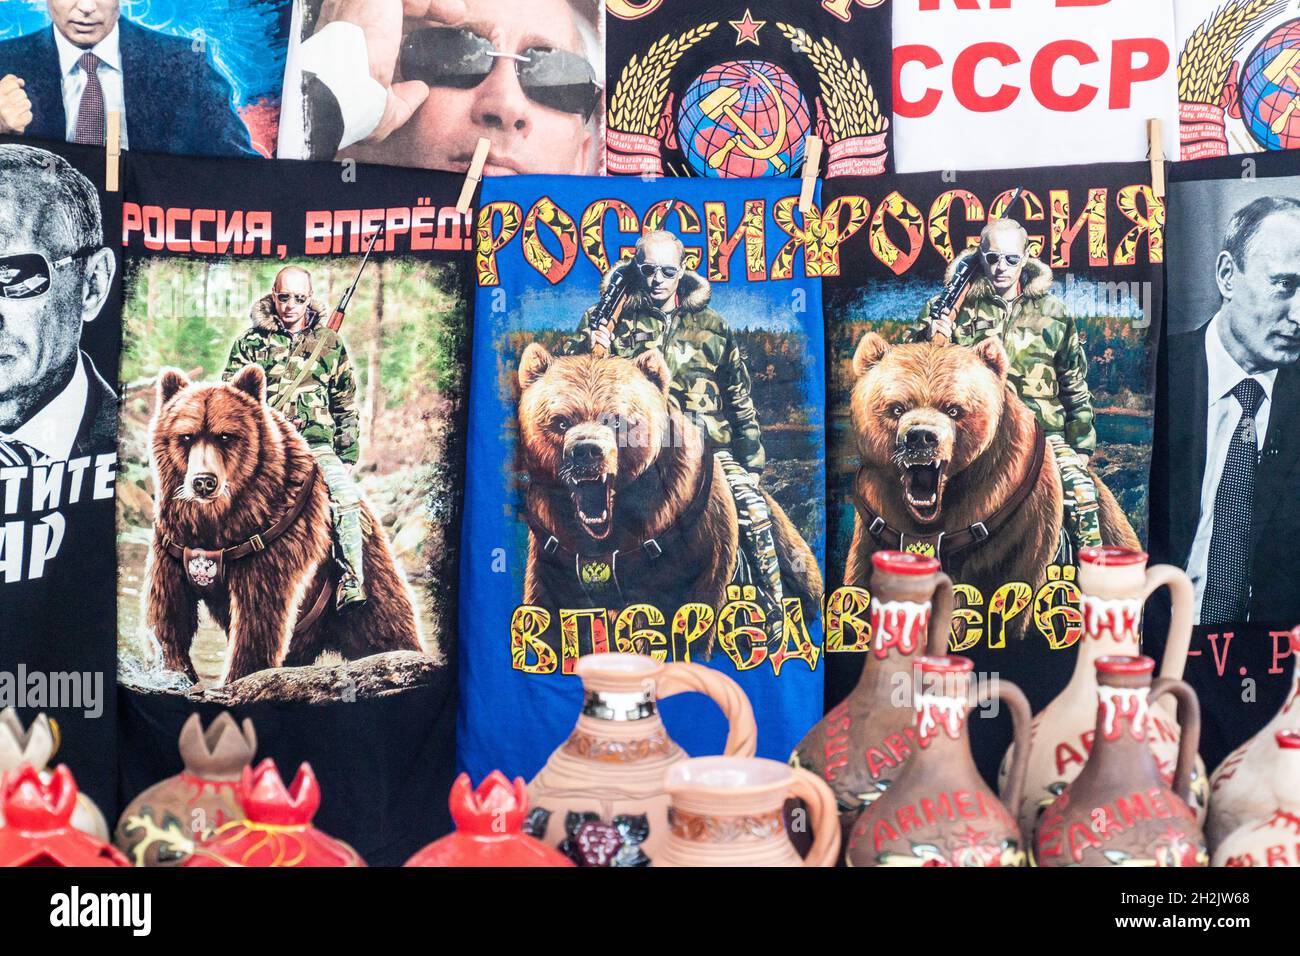 YEREVAN, ARMENIA - JULY 5, 2017: Souvenir T-shirts with Putin on a market in Yerevan, capital of Armenia Stock Photo